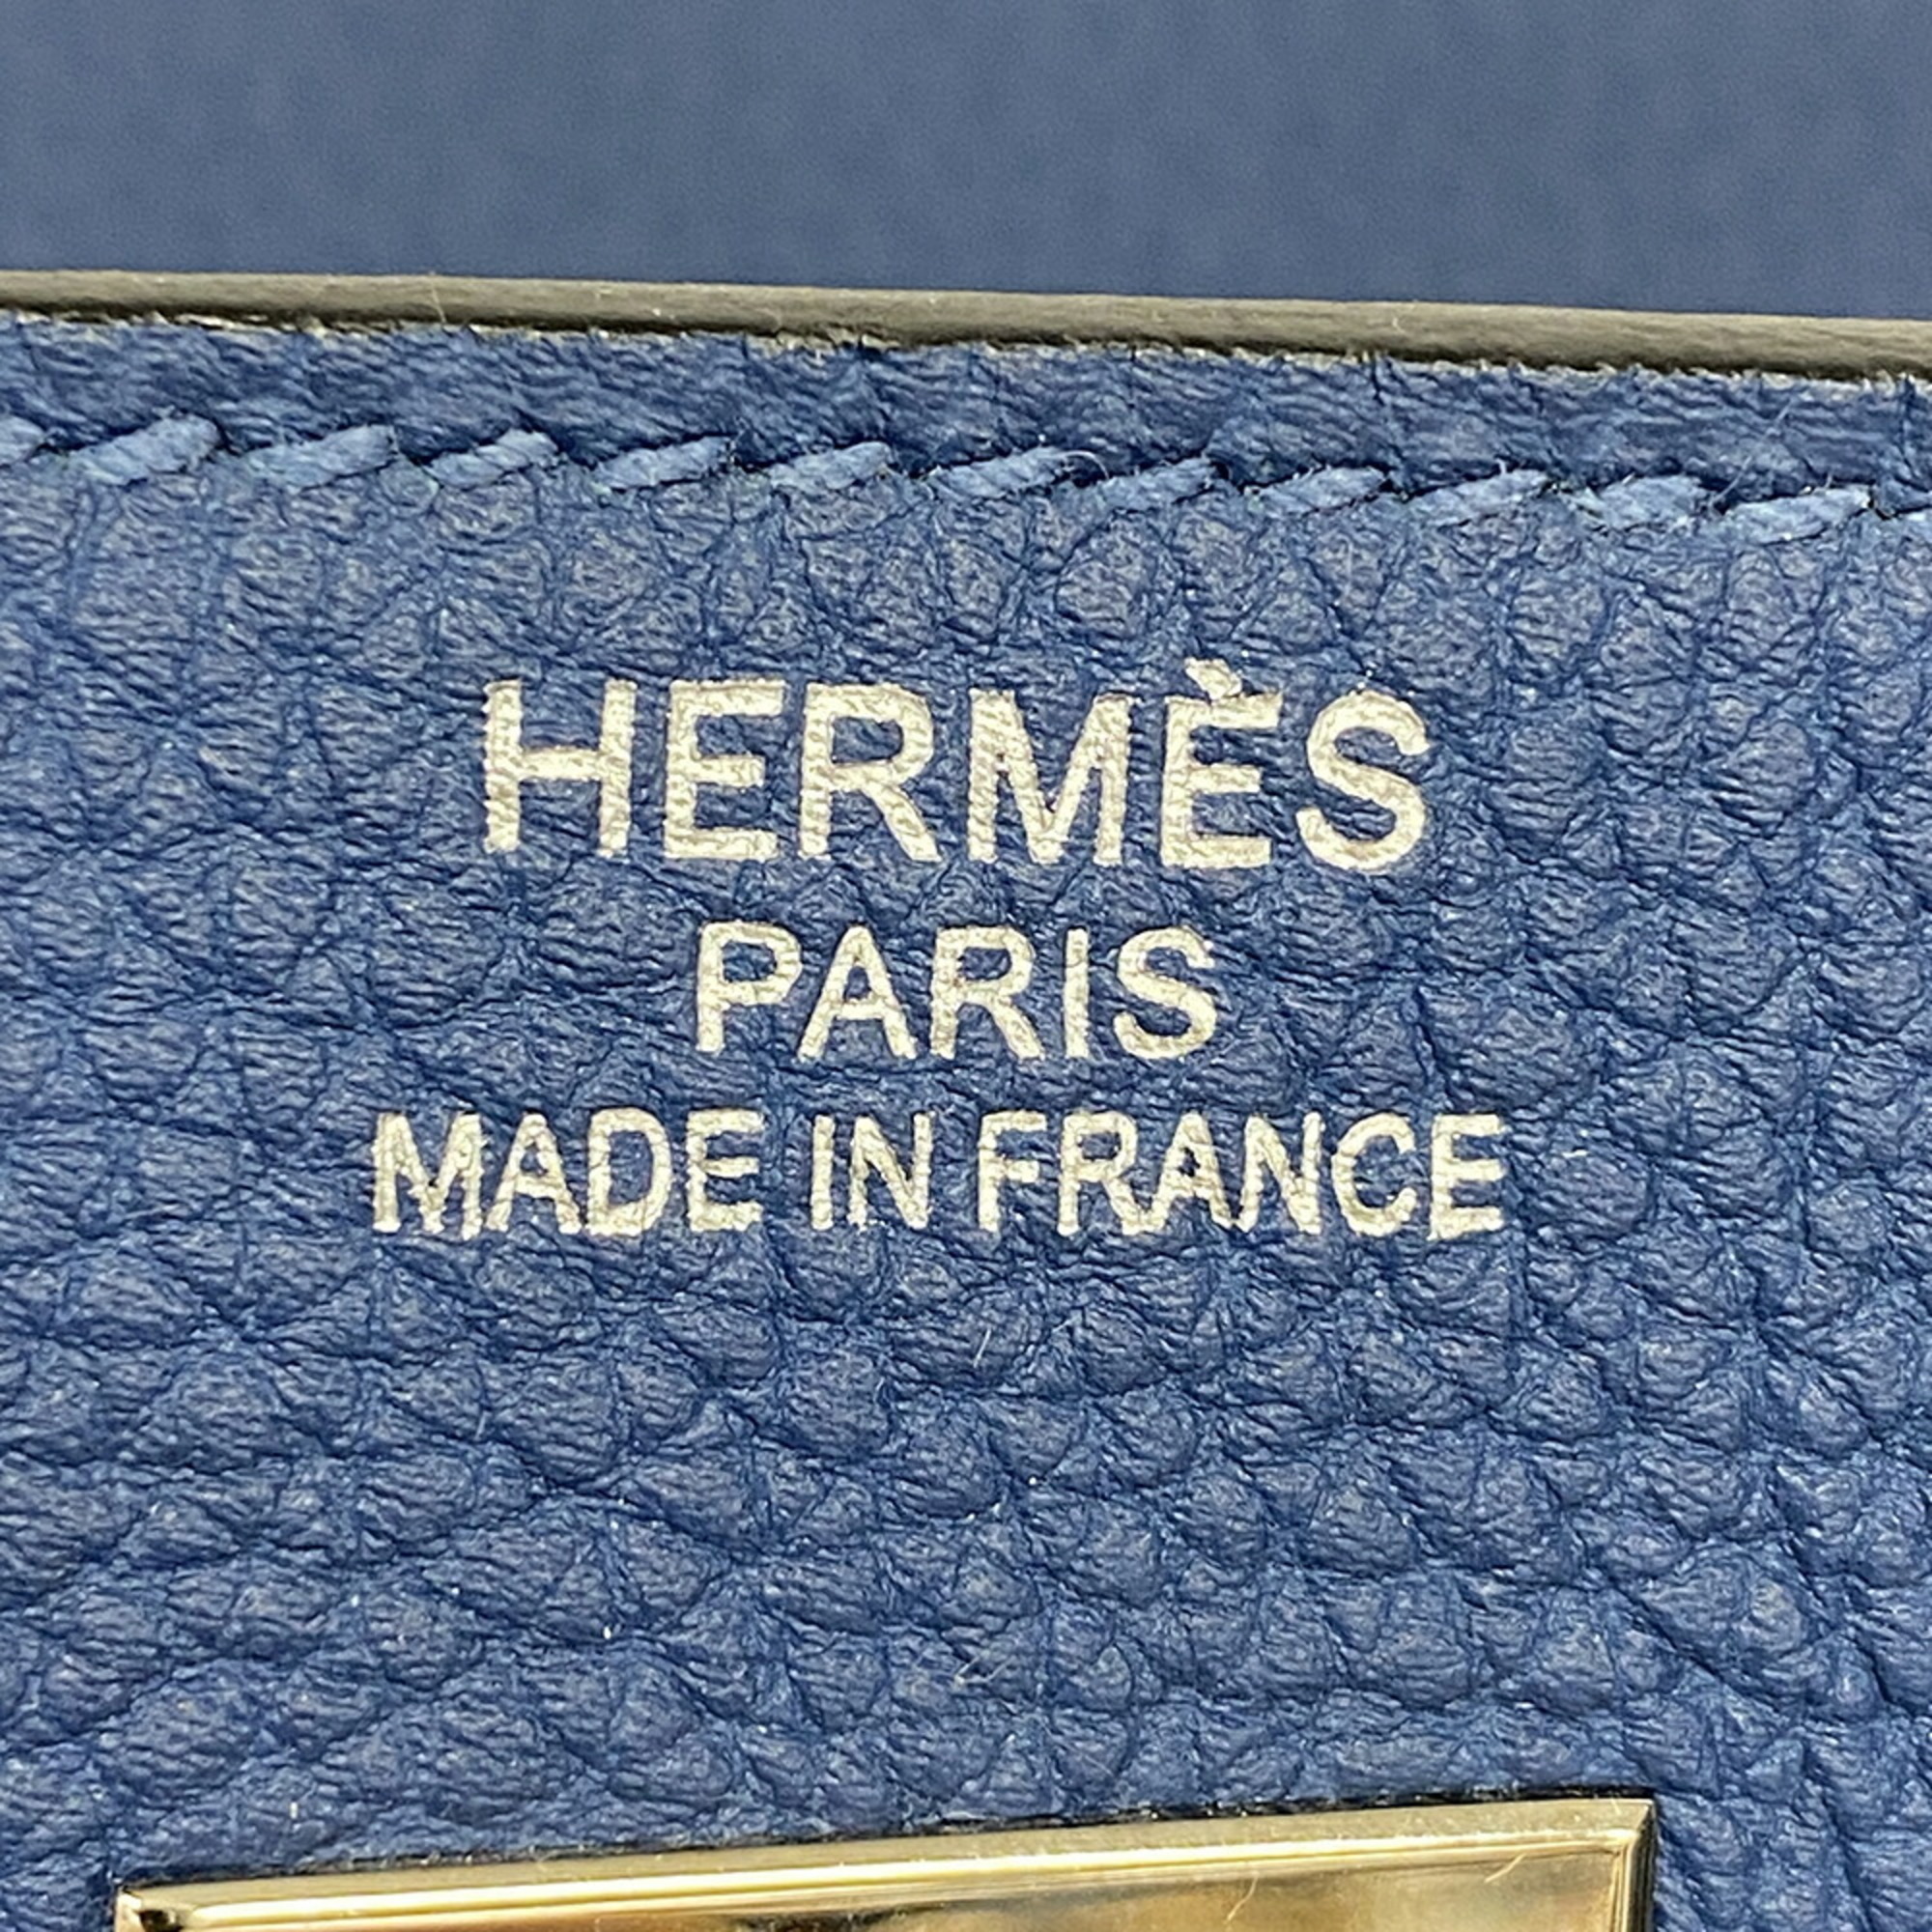 Hermes Handbag Birkin 40 D Engraved Togo Blue de Malte Men's Women's